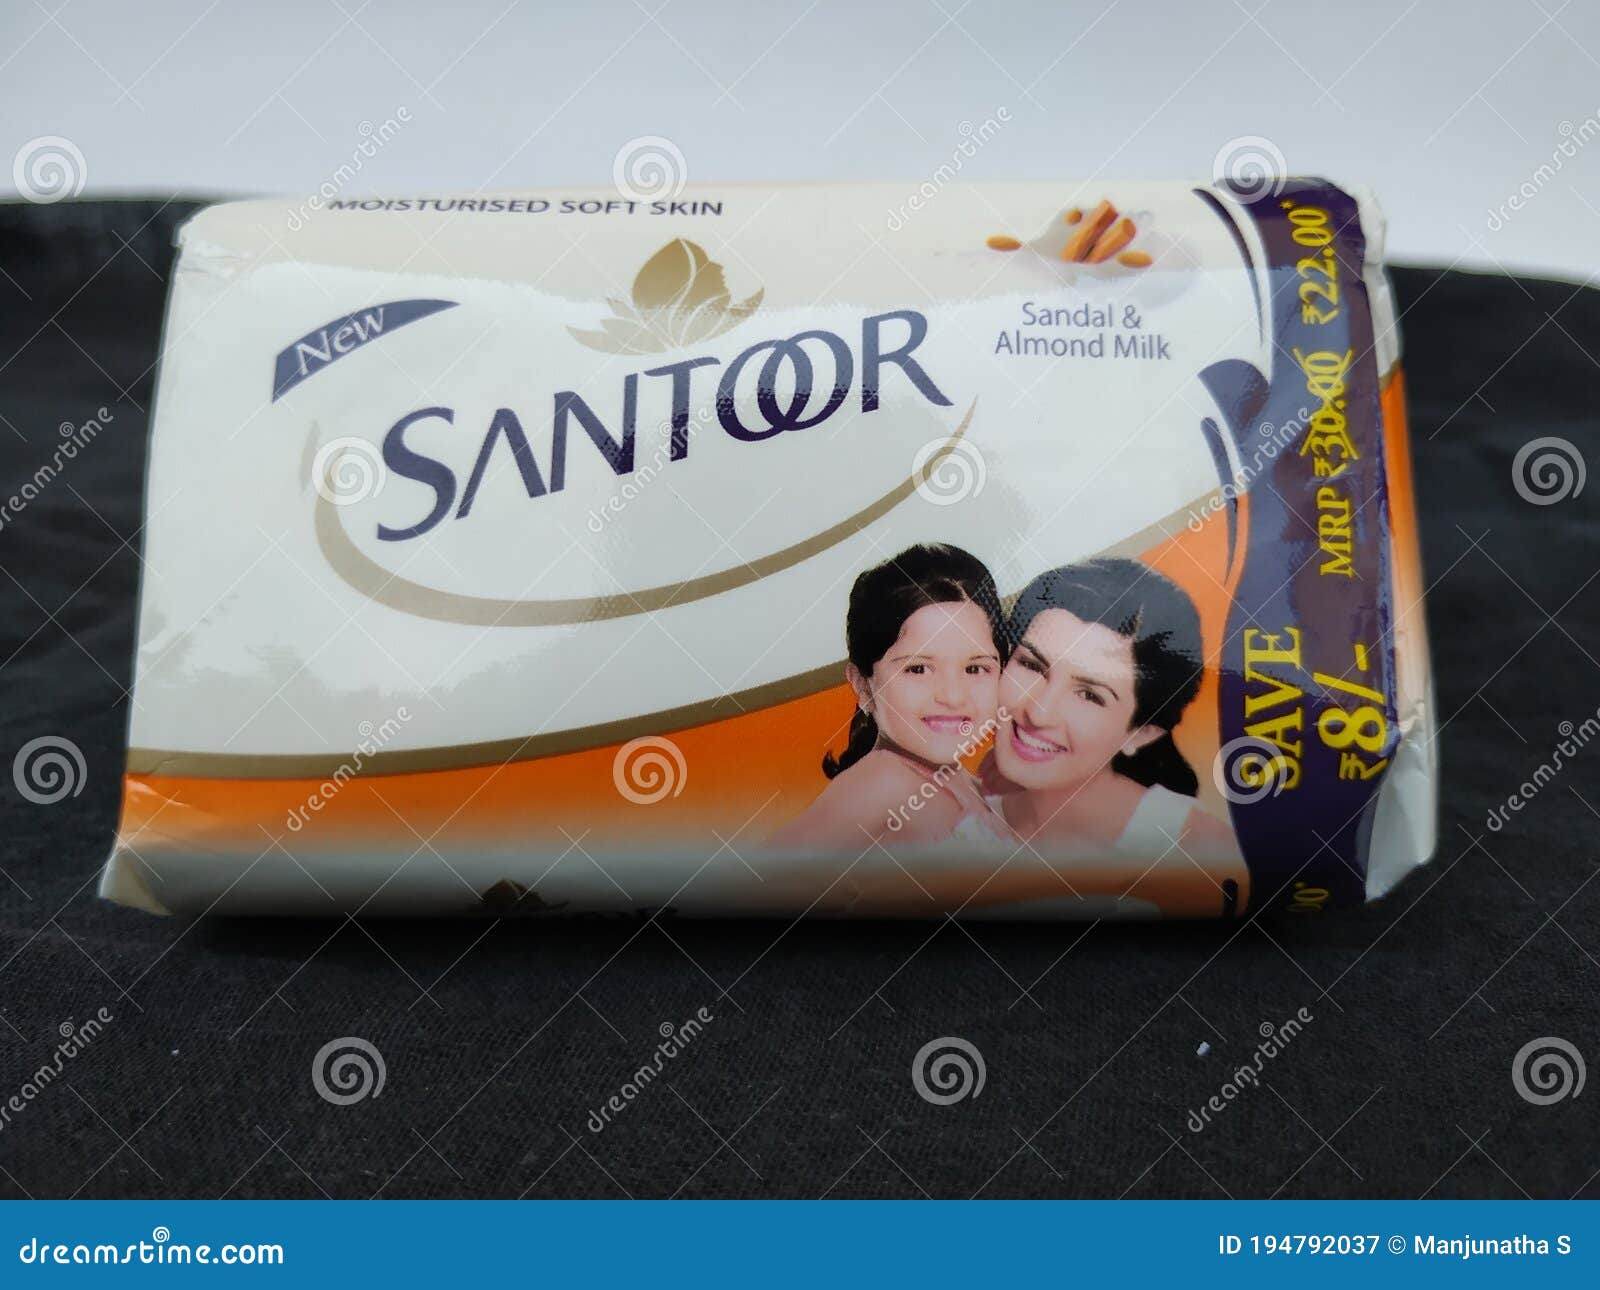 santoor soap disadvantages